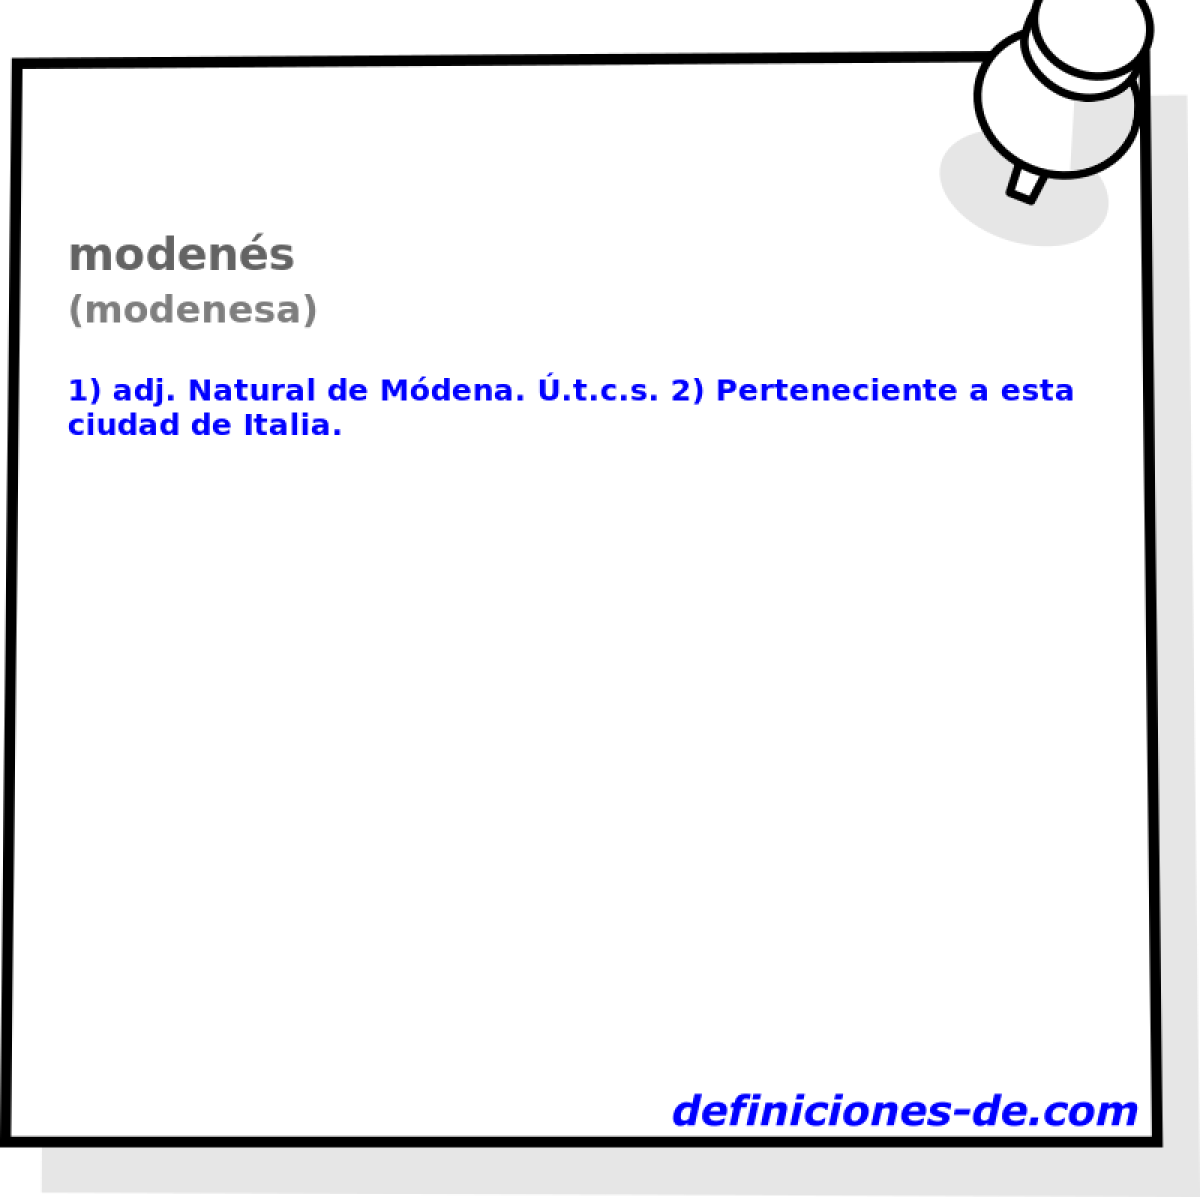 modens (modenesa)